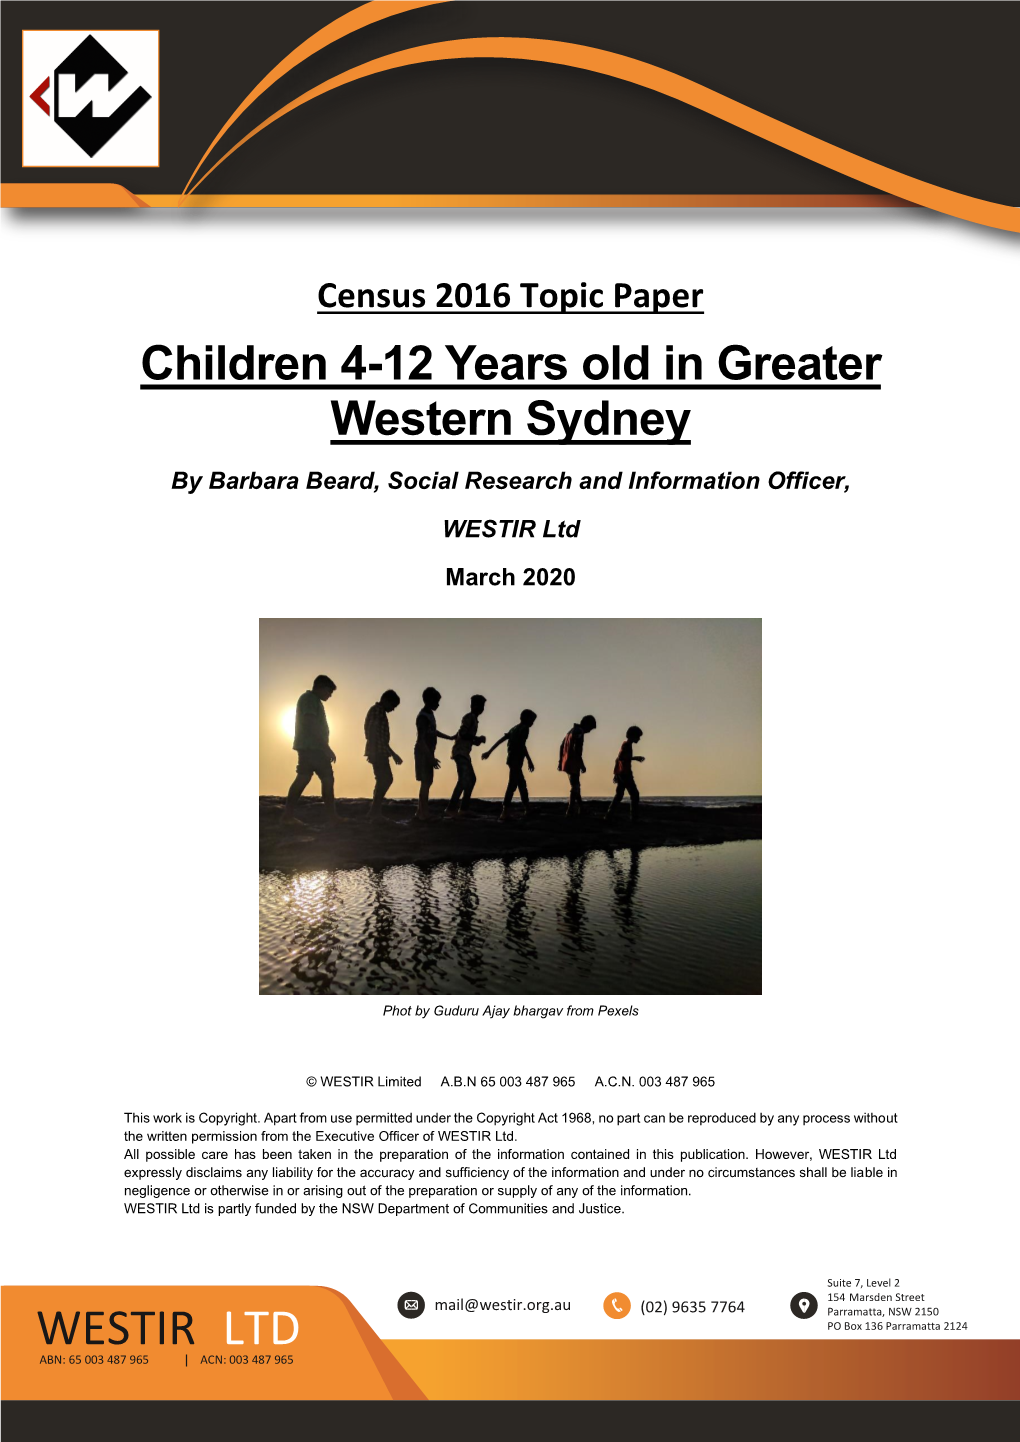 Children 4-12 Years Old in Greater Western Sydney